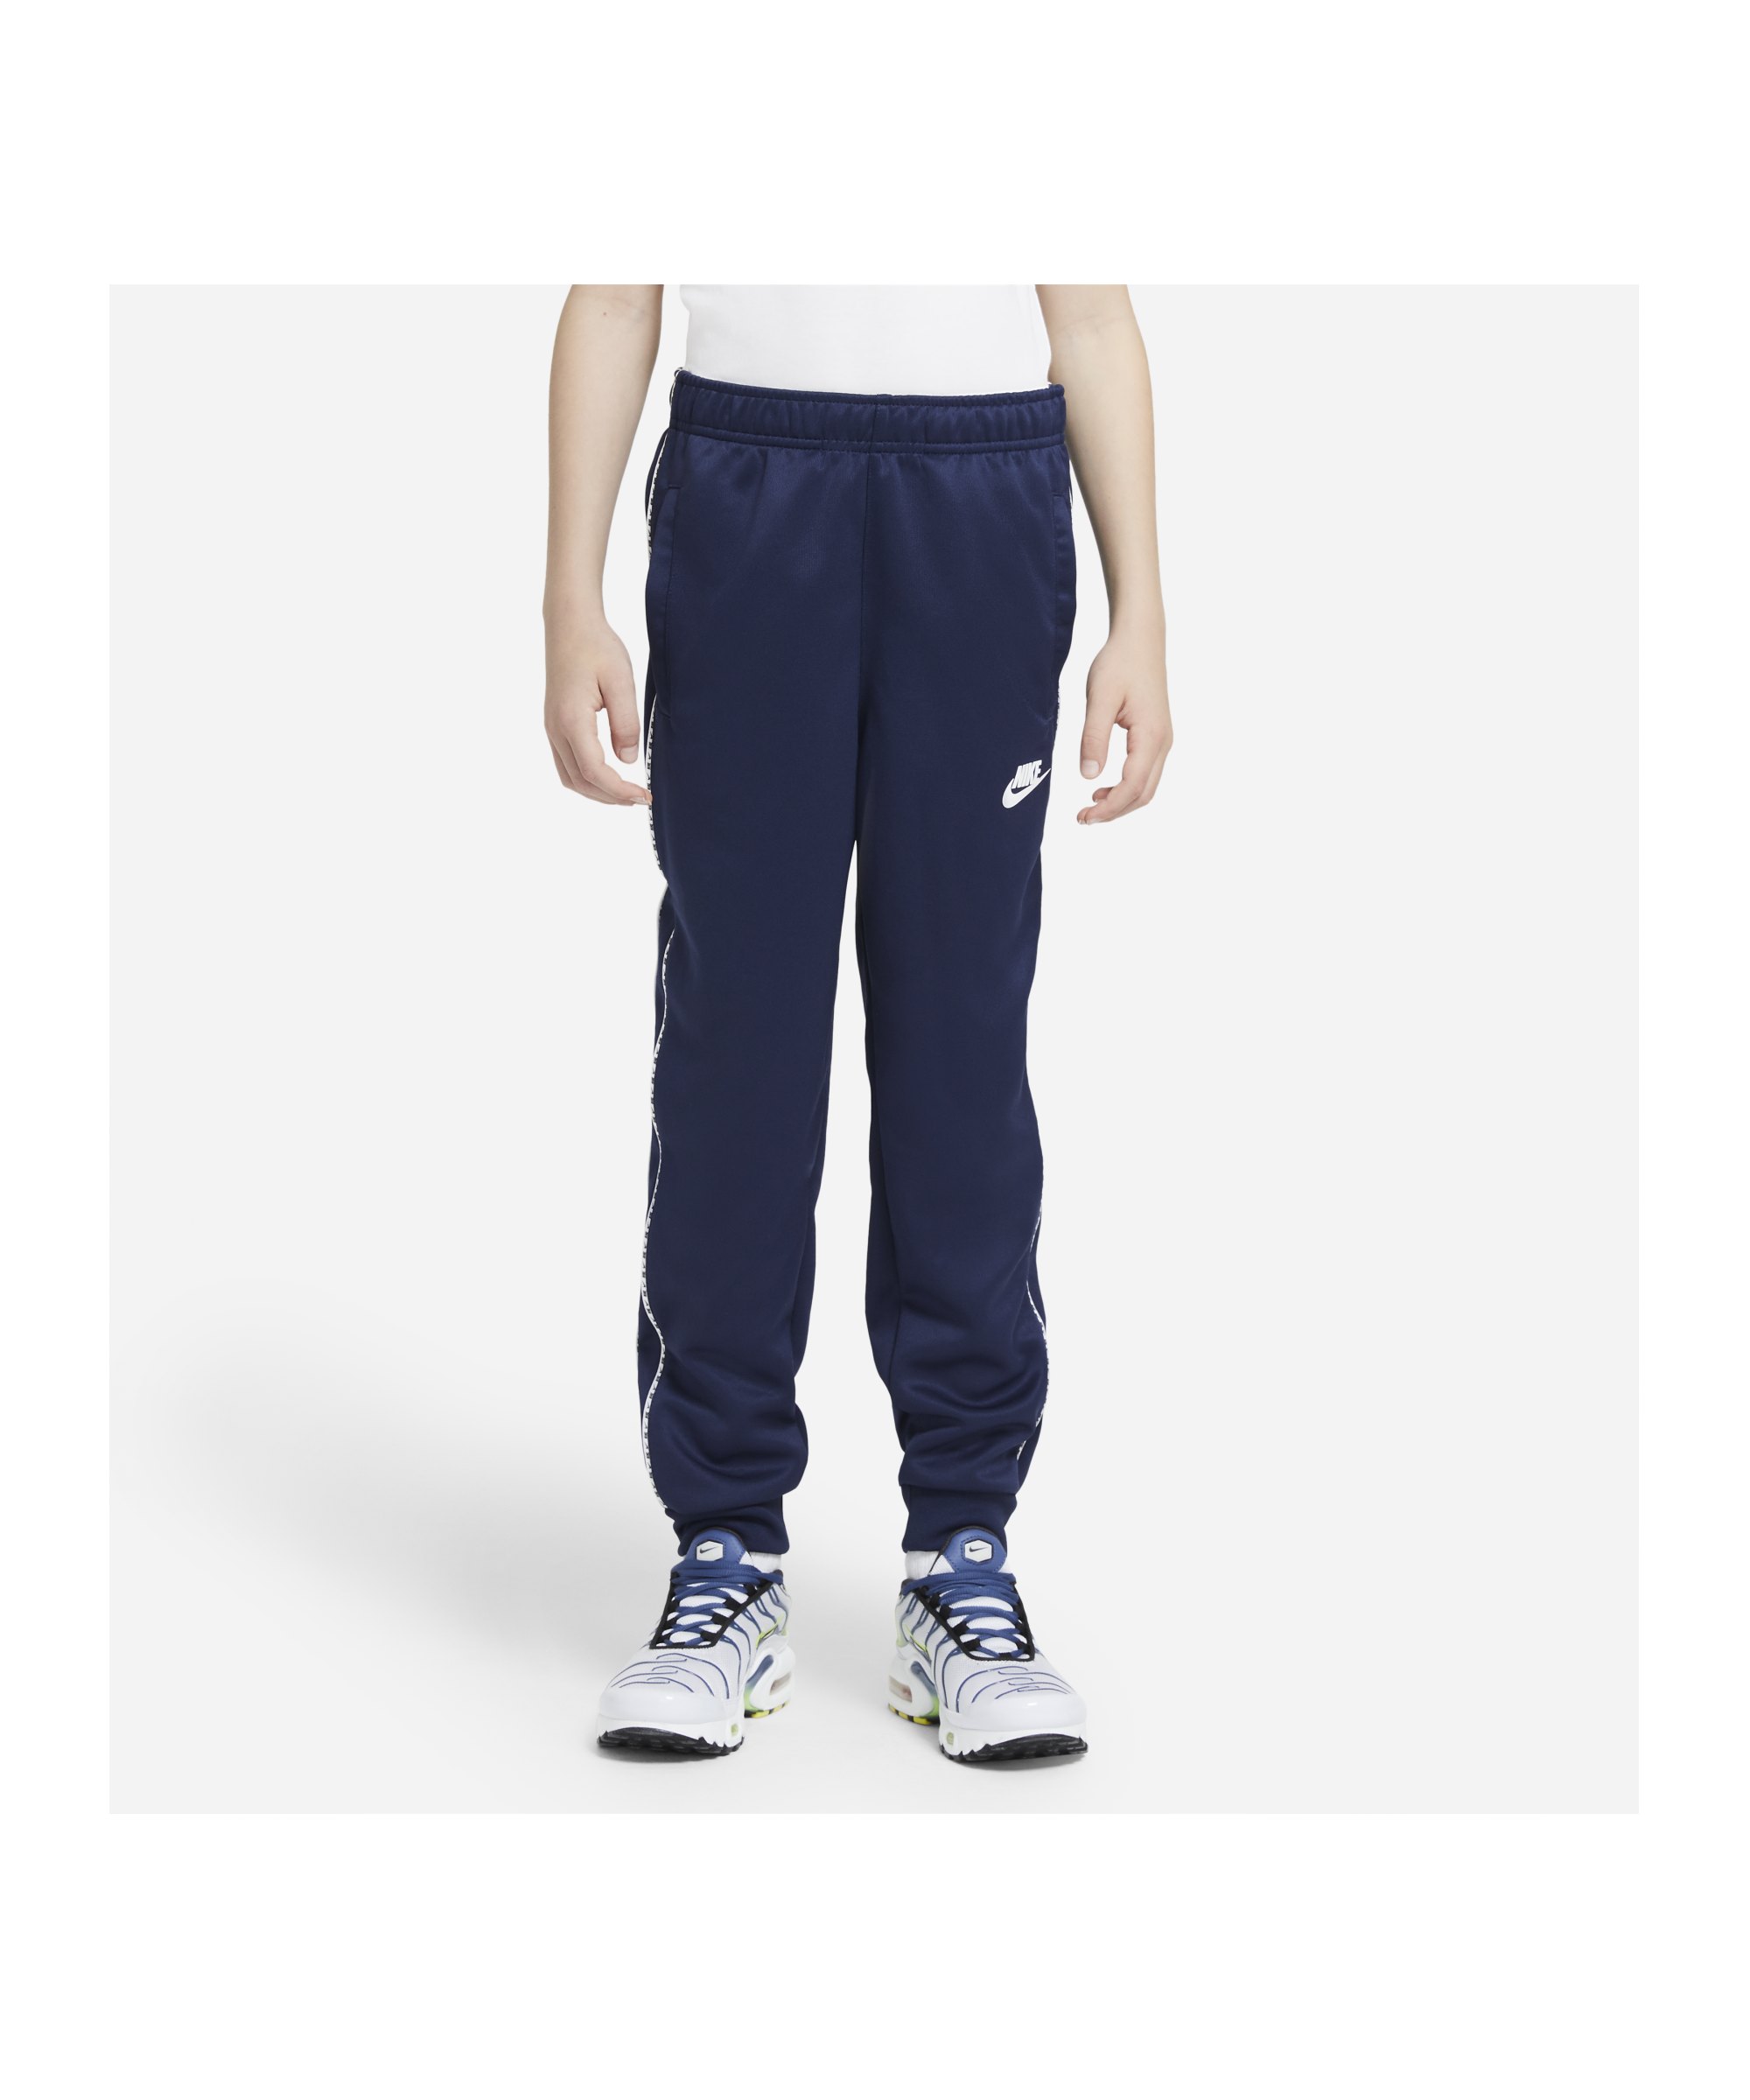 Nike Repeat Jogginghose Kids Blau Weiss F410 - blau